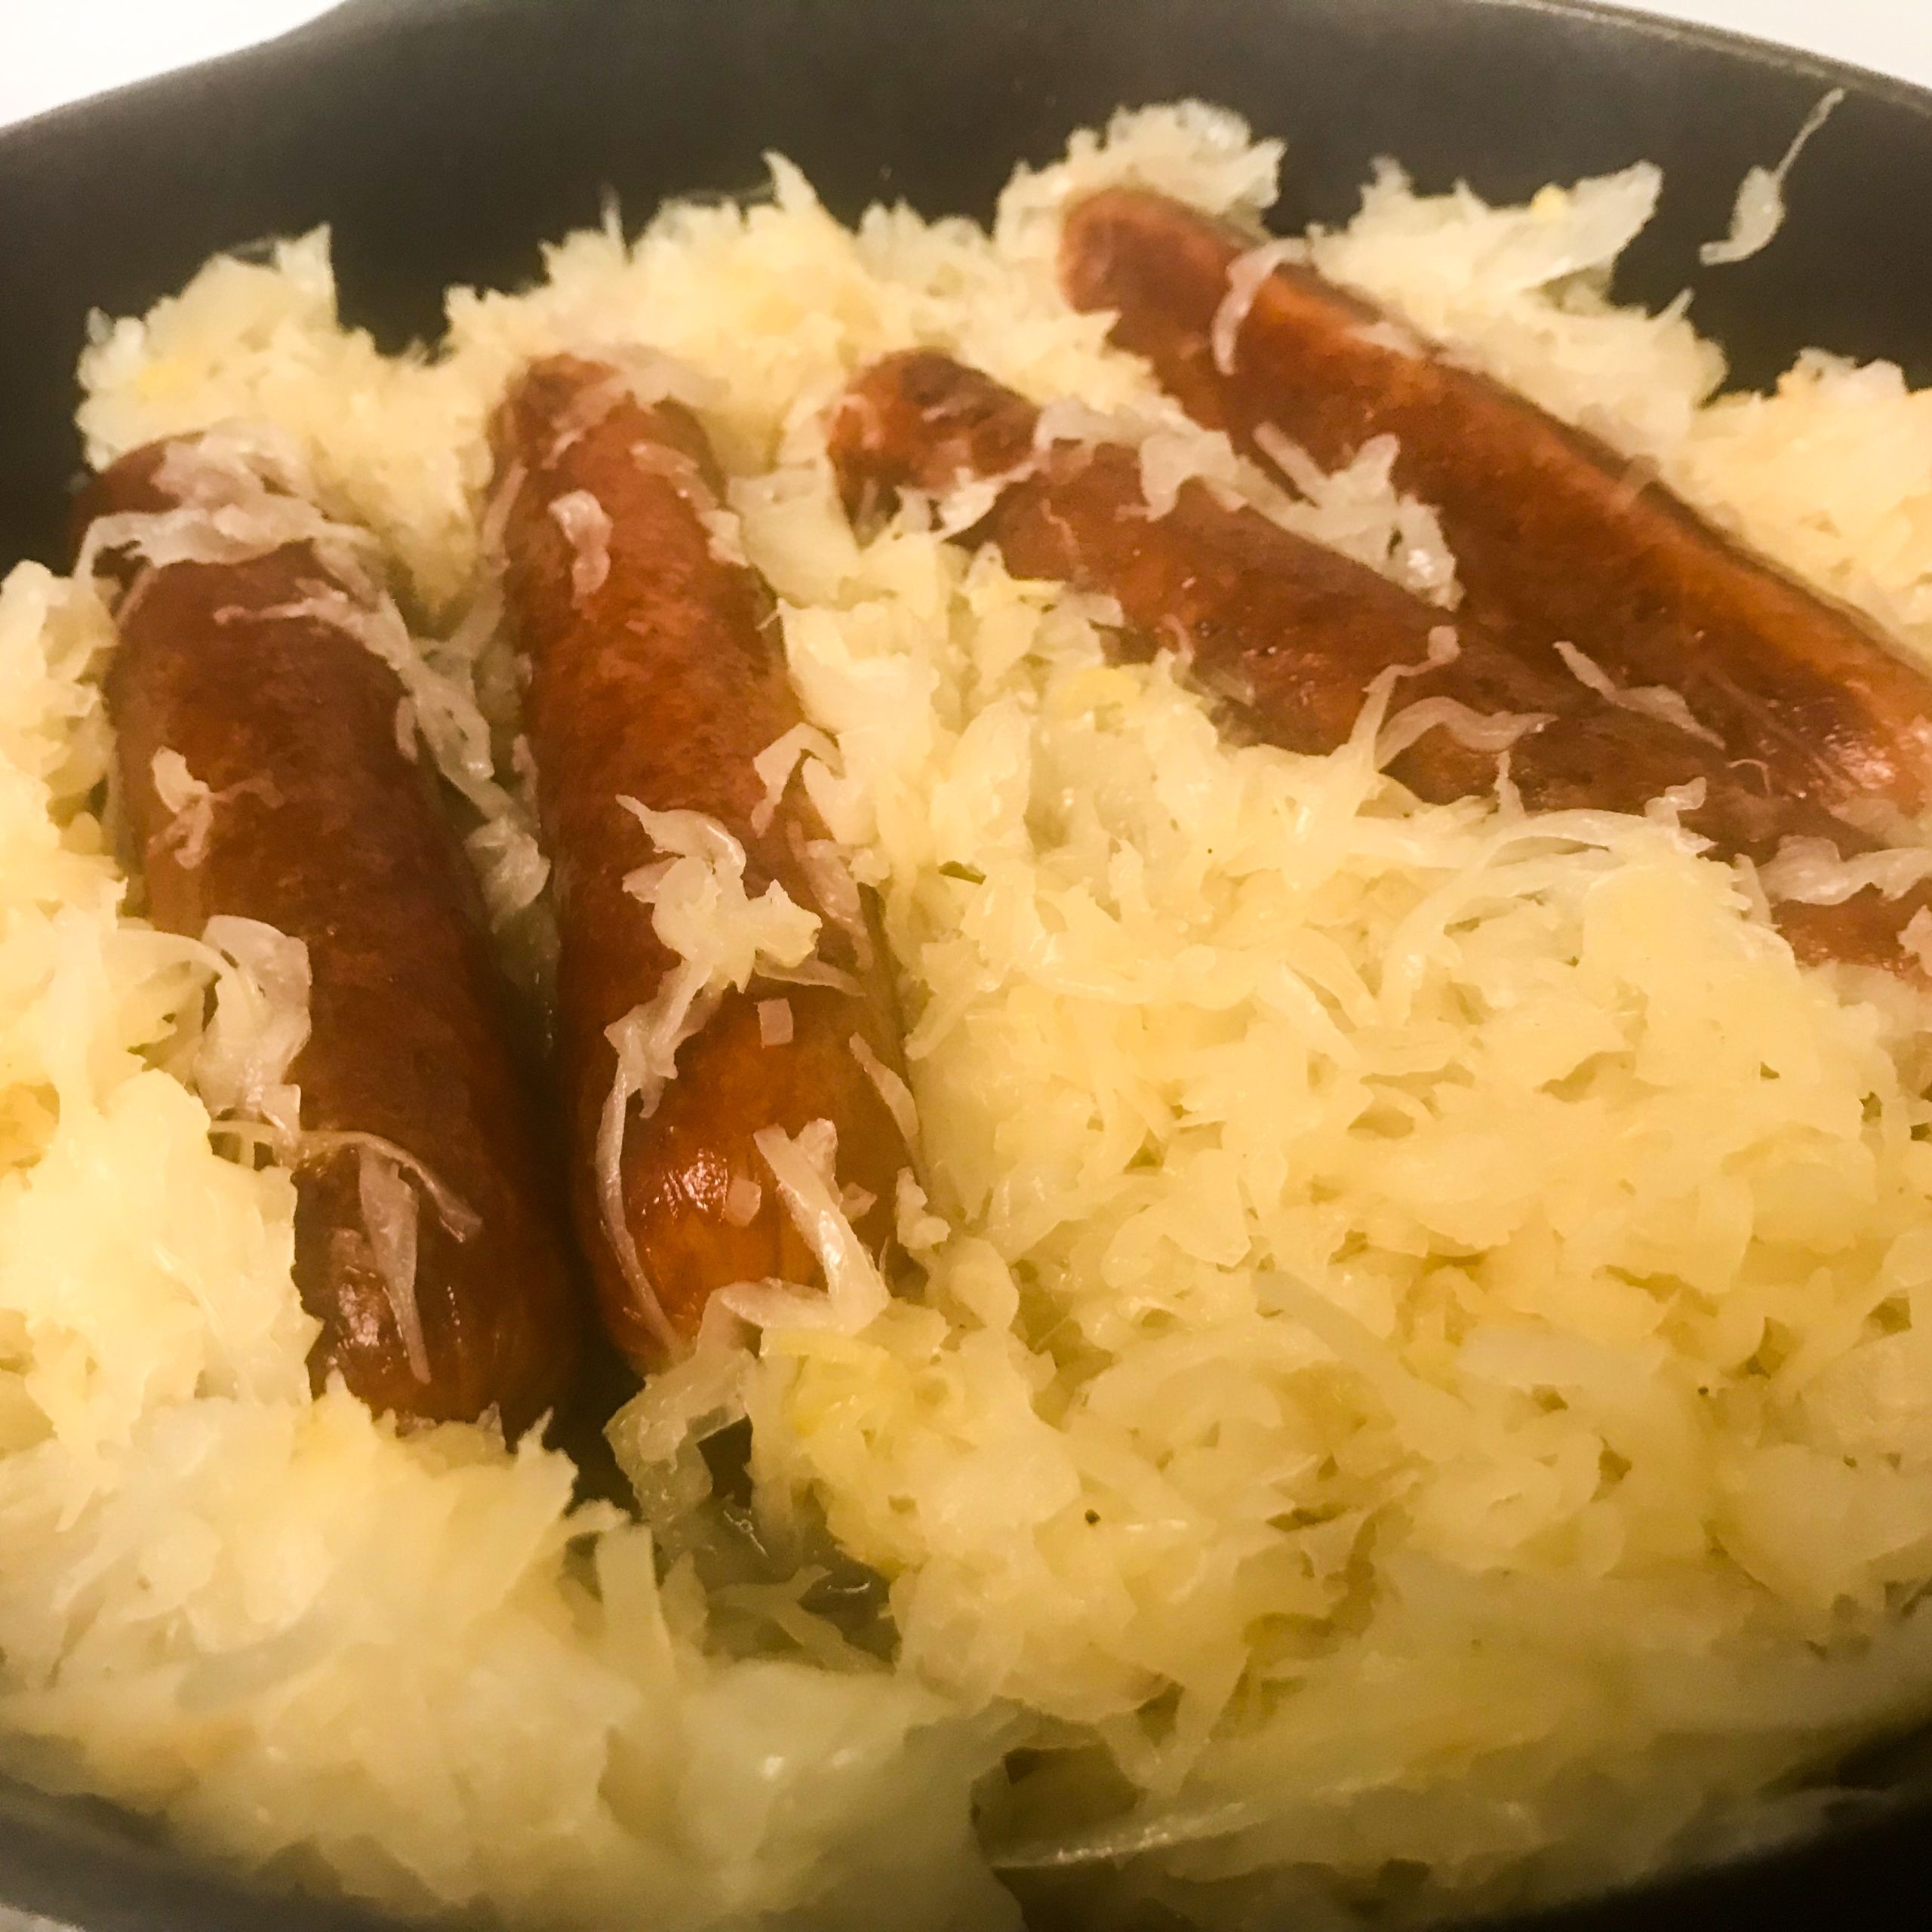 knockwurst and sauerkraut in a skillet